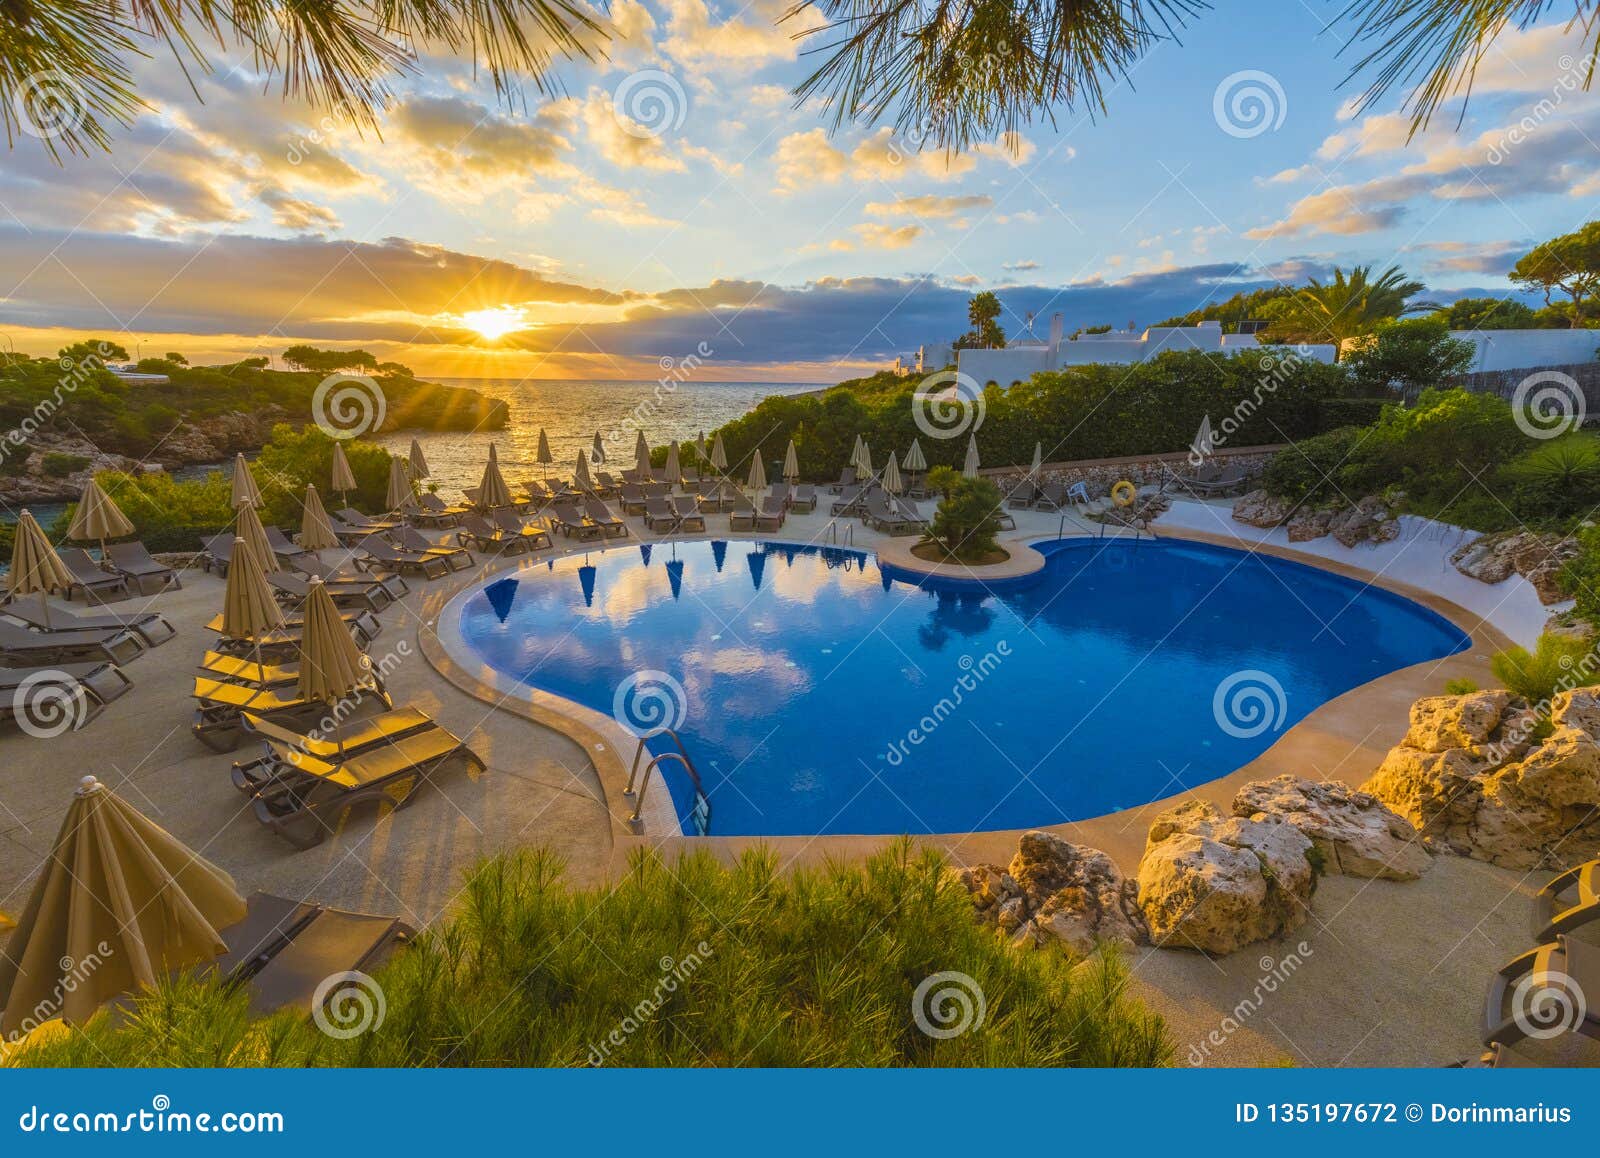 beautiful pool in cala dor at sunset time, palma mallorca island, spain